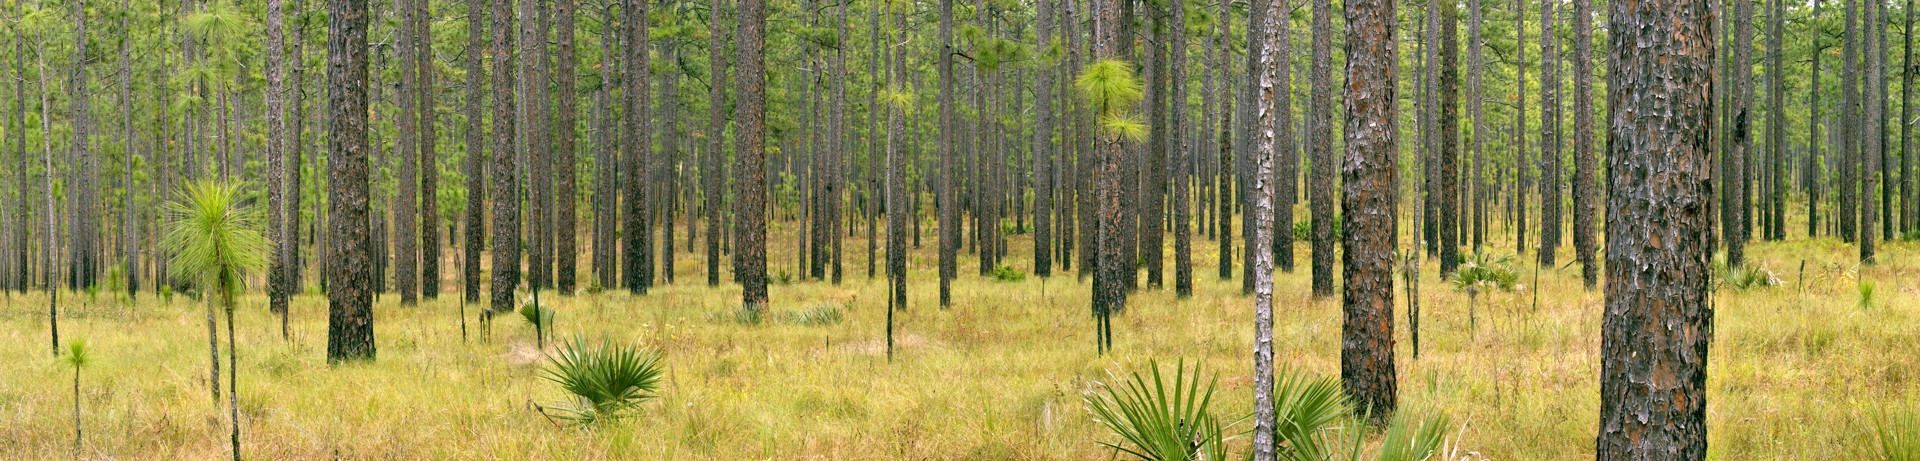 Ocala Pines by Carlton Ward Photography